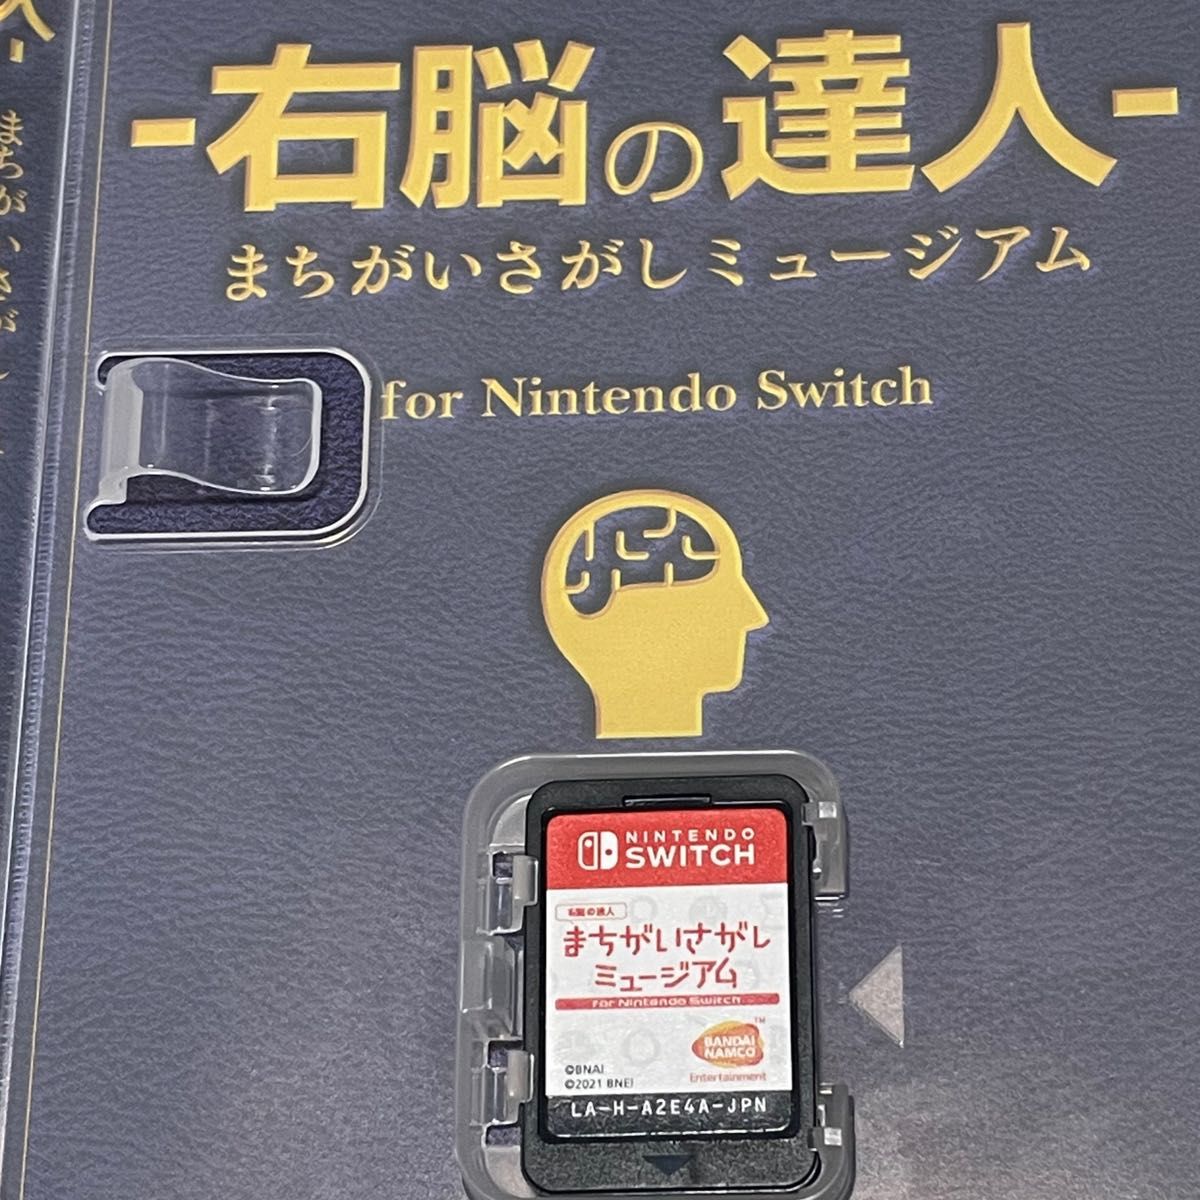 【Switch】 -右脳の達人- まちがいさがしミュージアム for Nintendo Switch